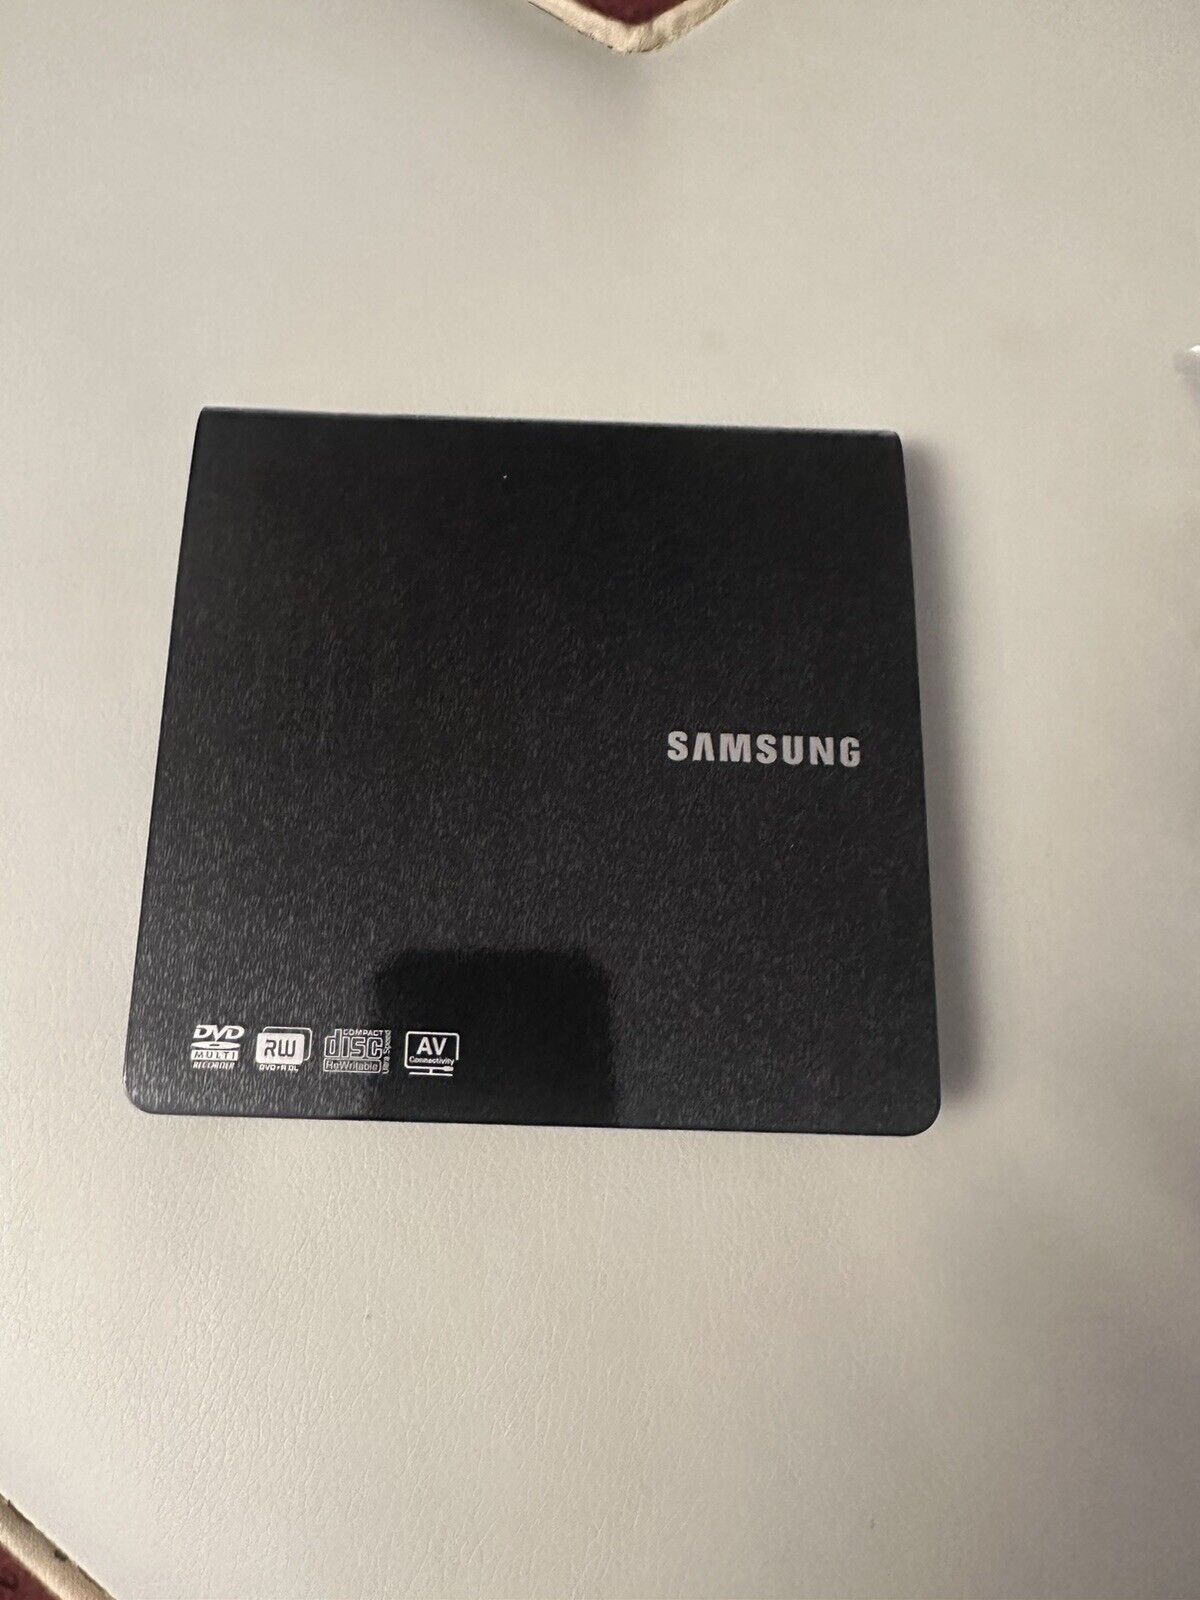 NEW Samsung SE-208DB/TSBS Slim Portable DVD Writer Player External Drive (Black)